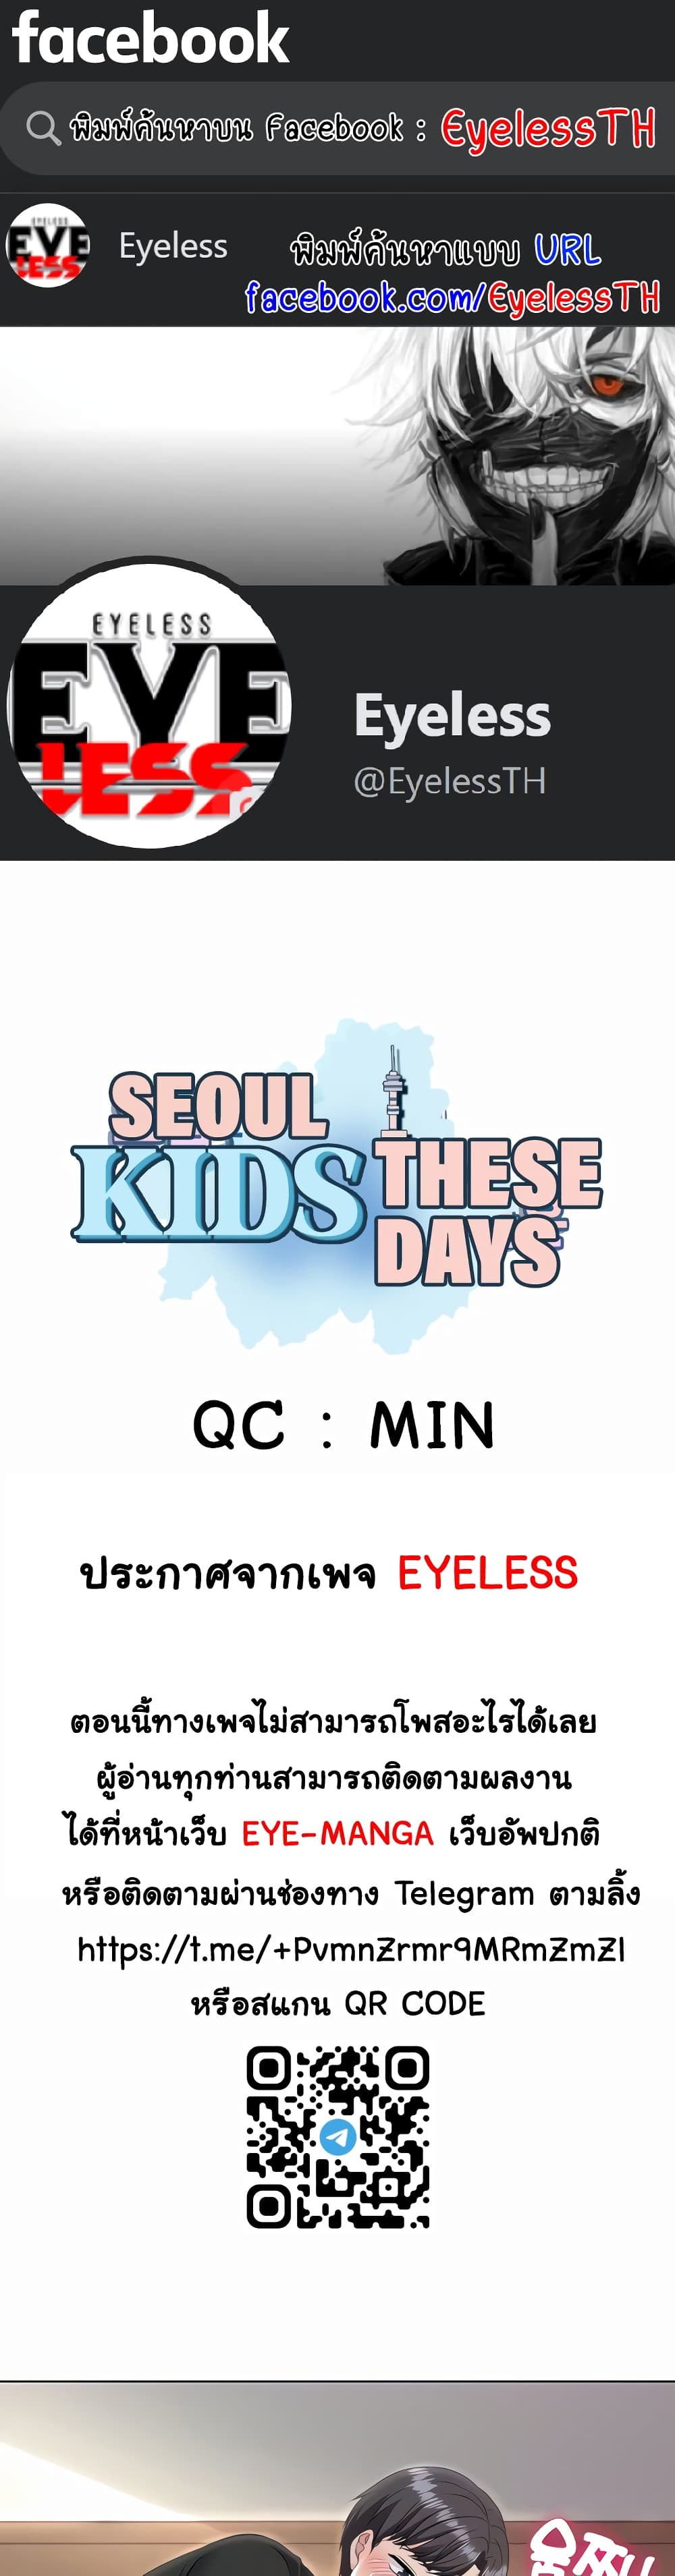 Seoul Kids These Days 4-4